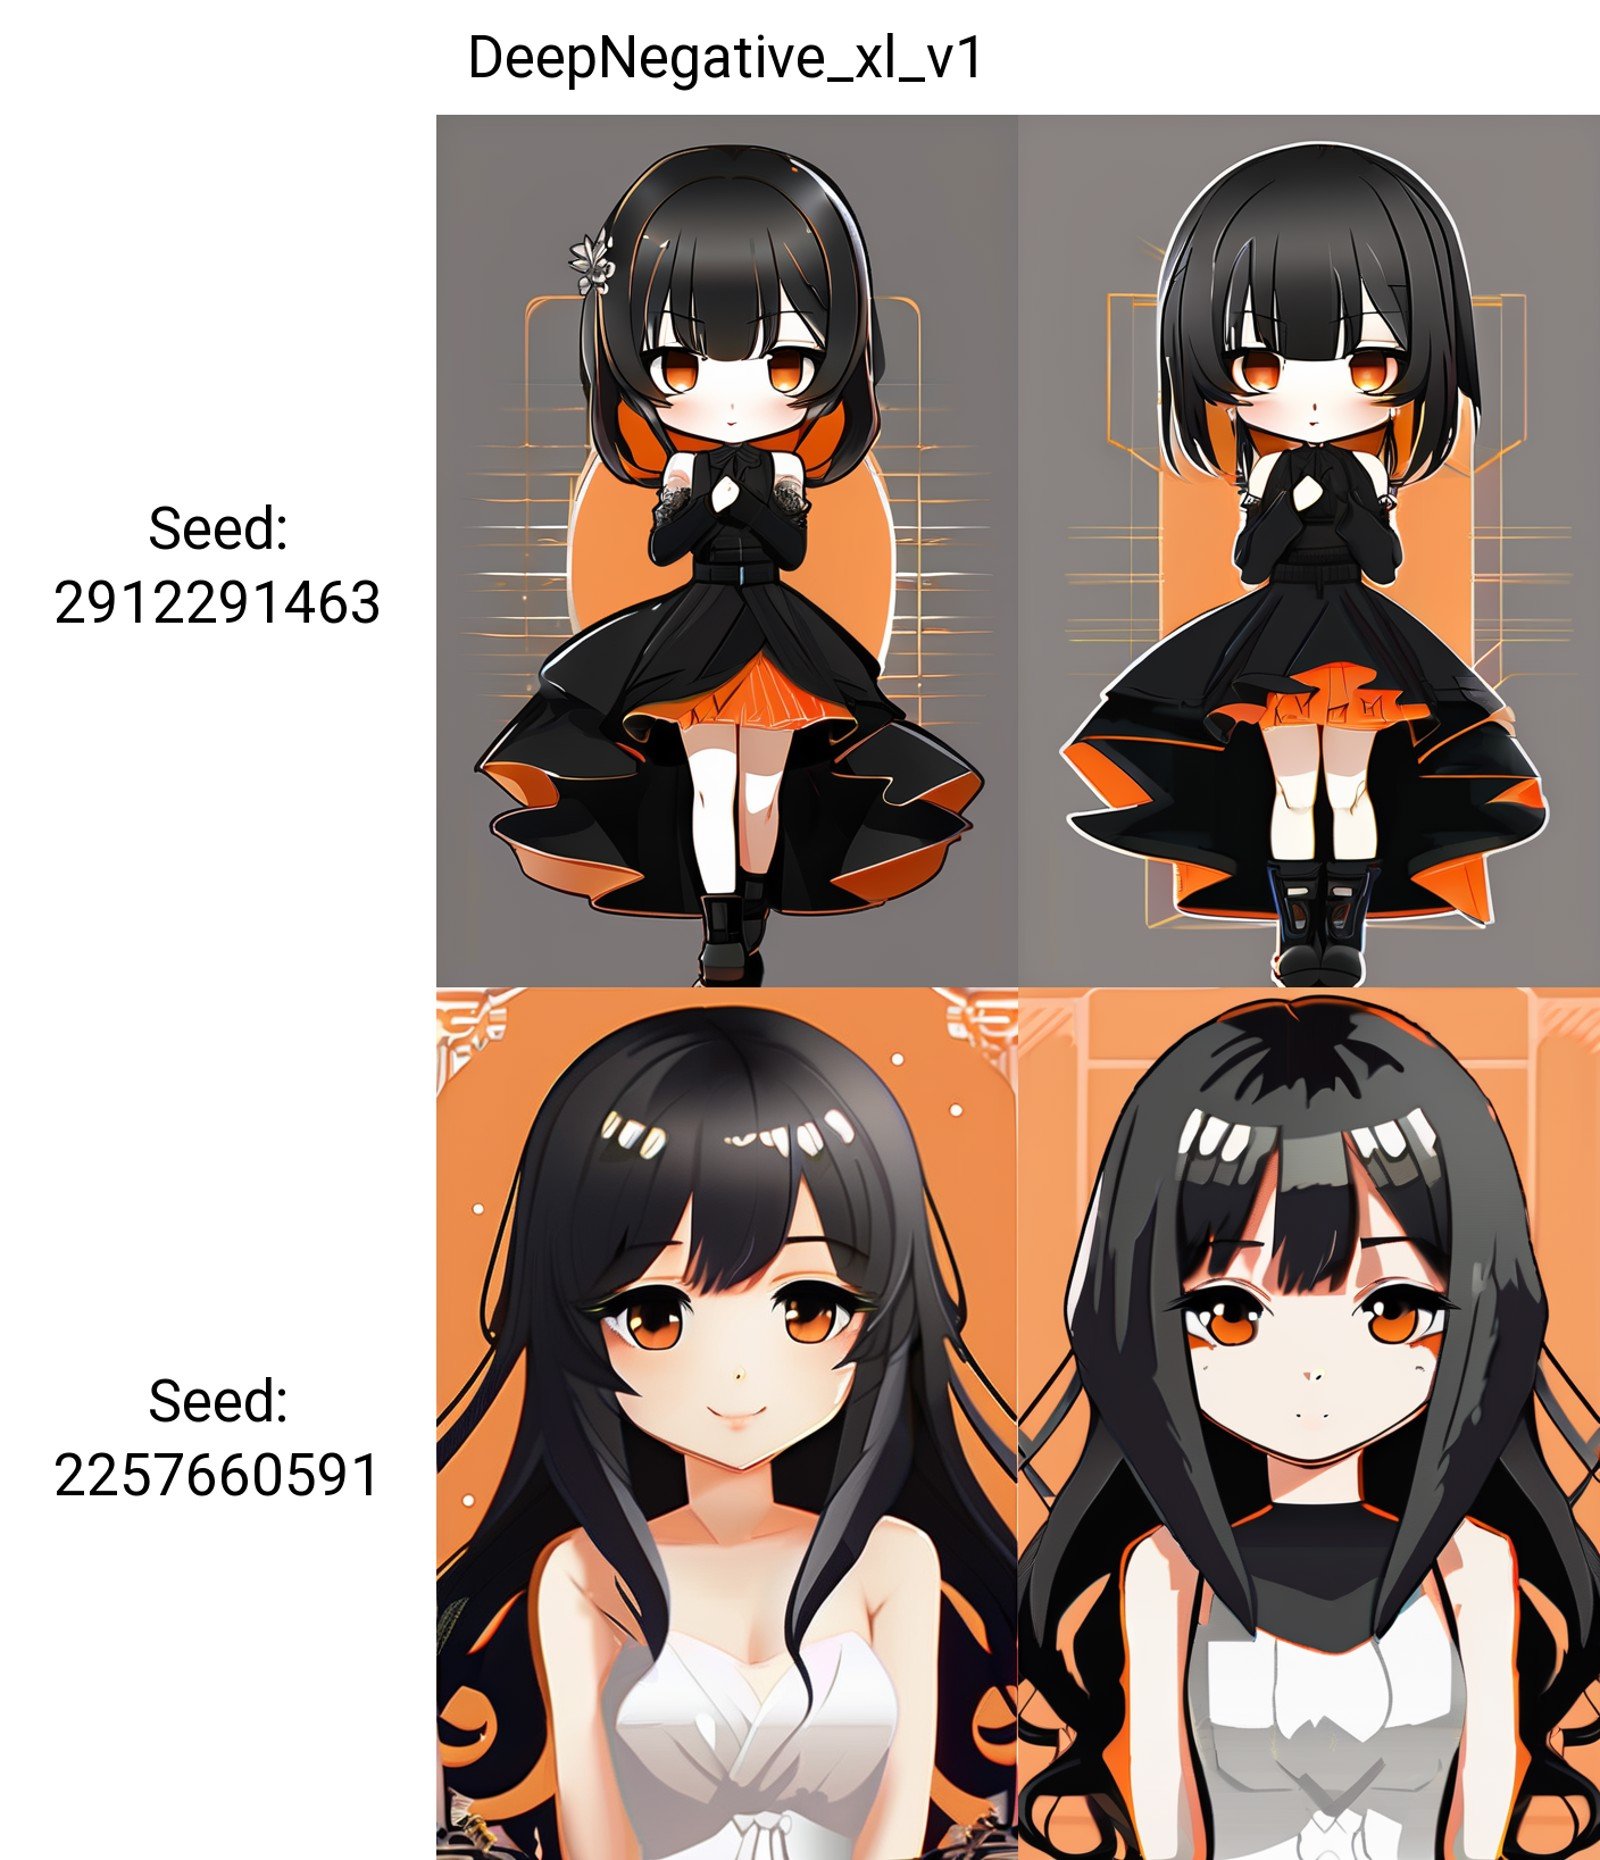 Chibi anime style1girl,hair with bangs,black long dress,orange background,